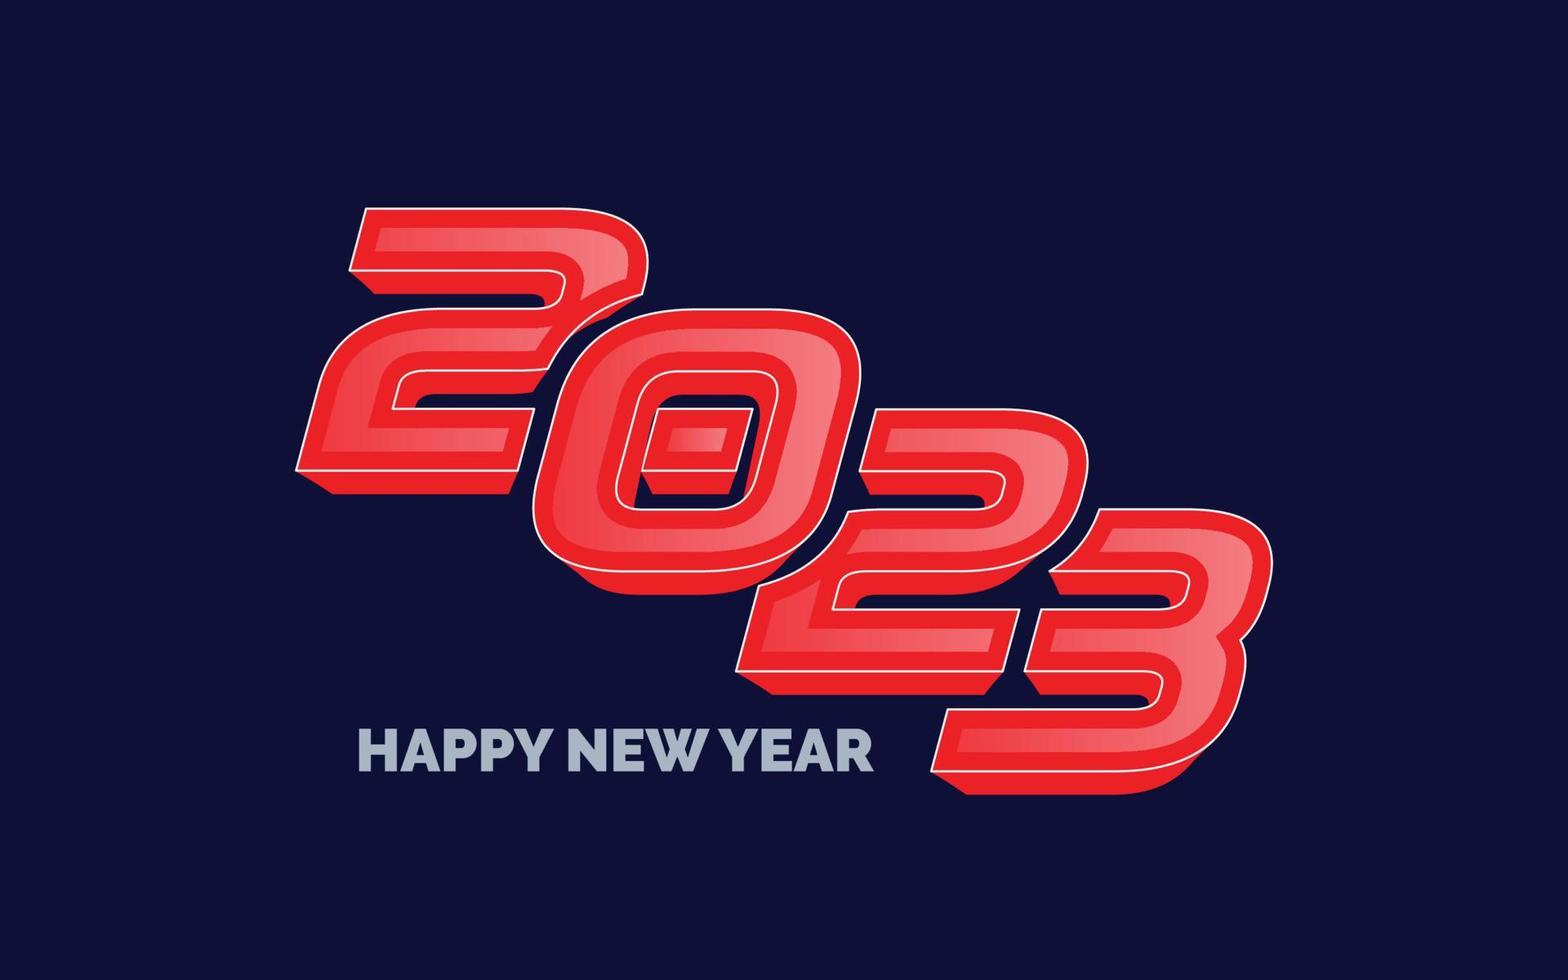 Happy new year 2023 Glossy Typography logo design vector